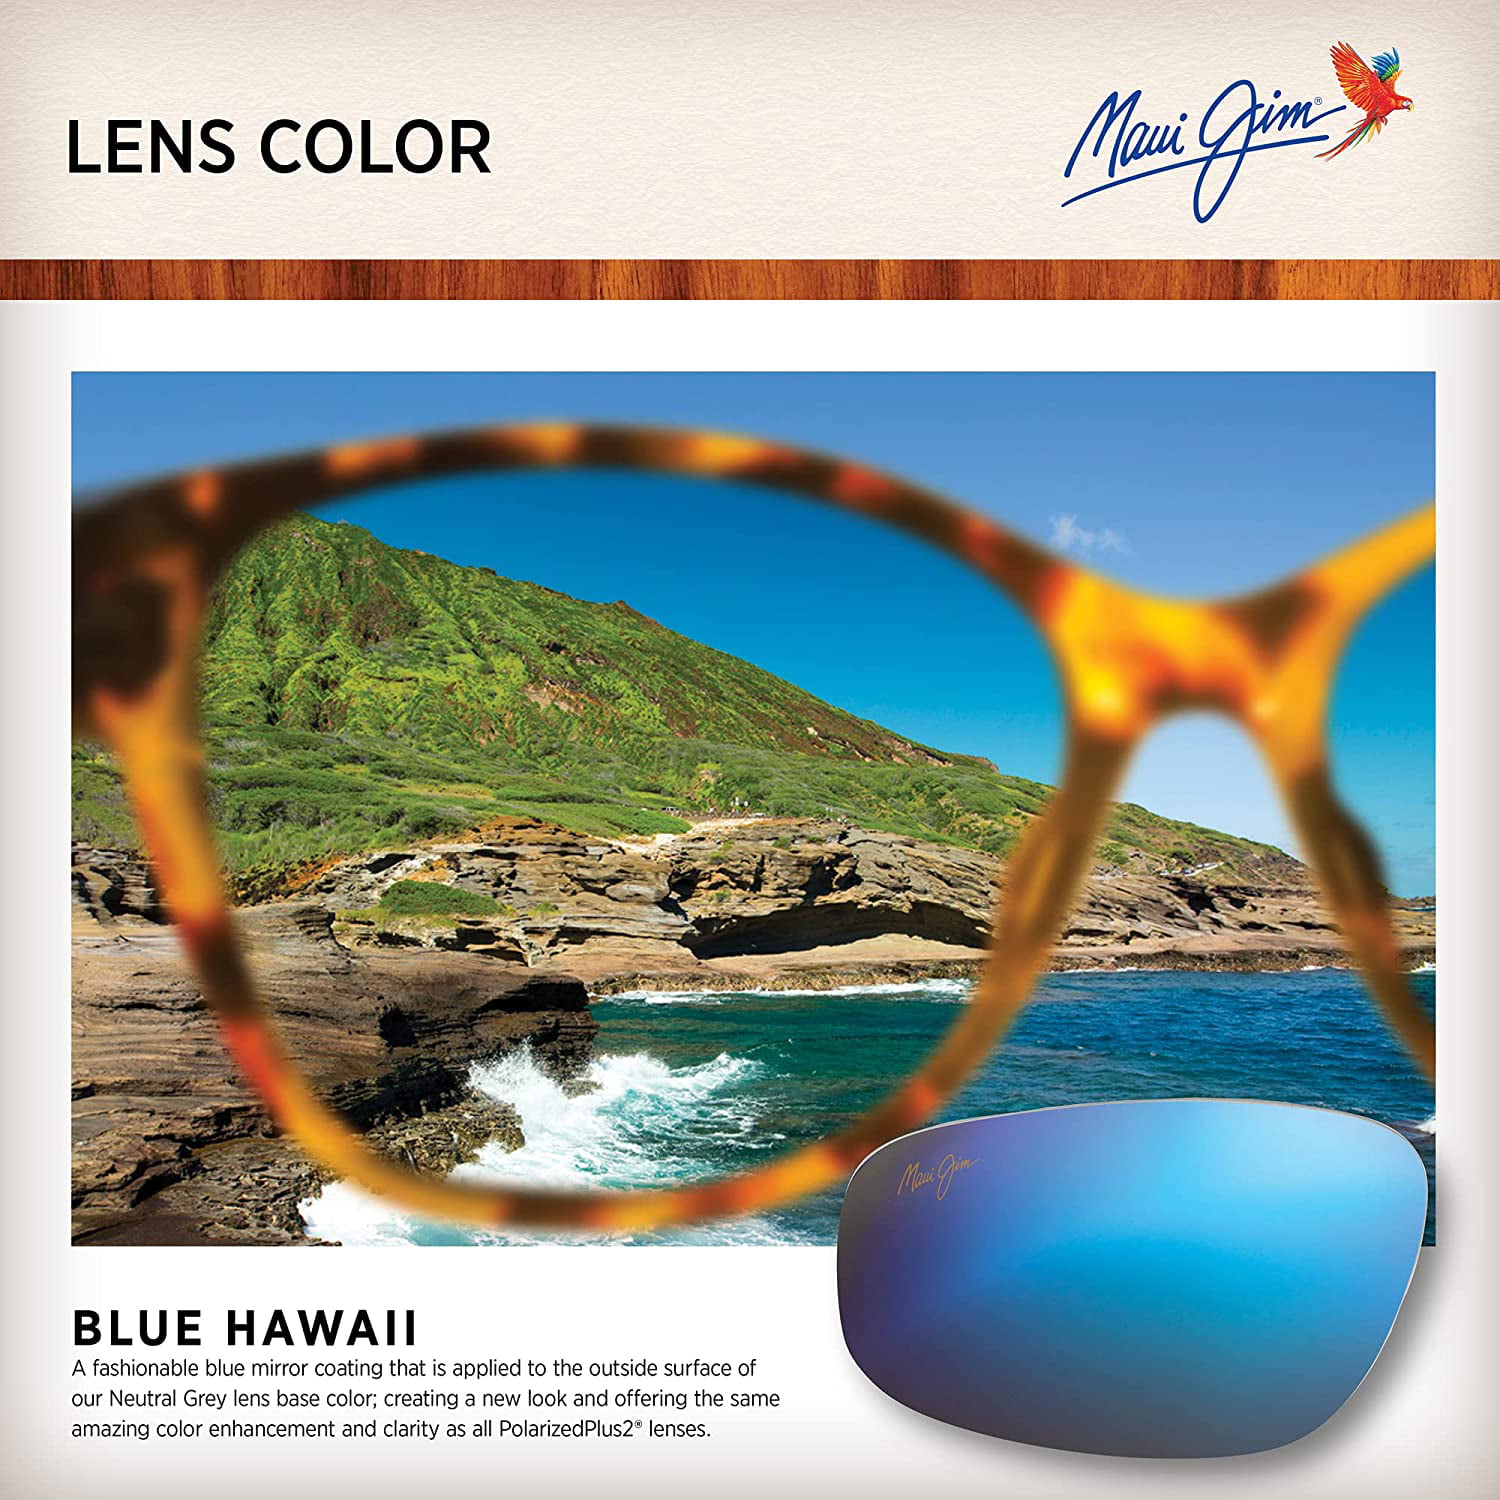 Maui Jim Nautilus Blue Hawaii Round Ladies Sunglasses B544N-11B 50